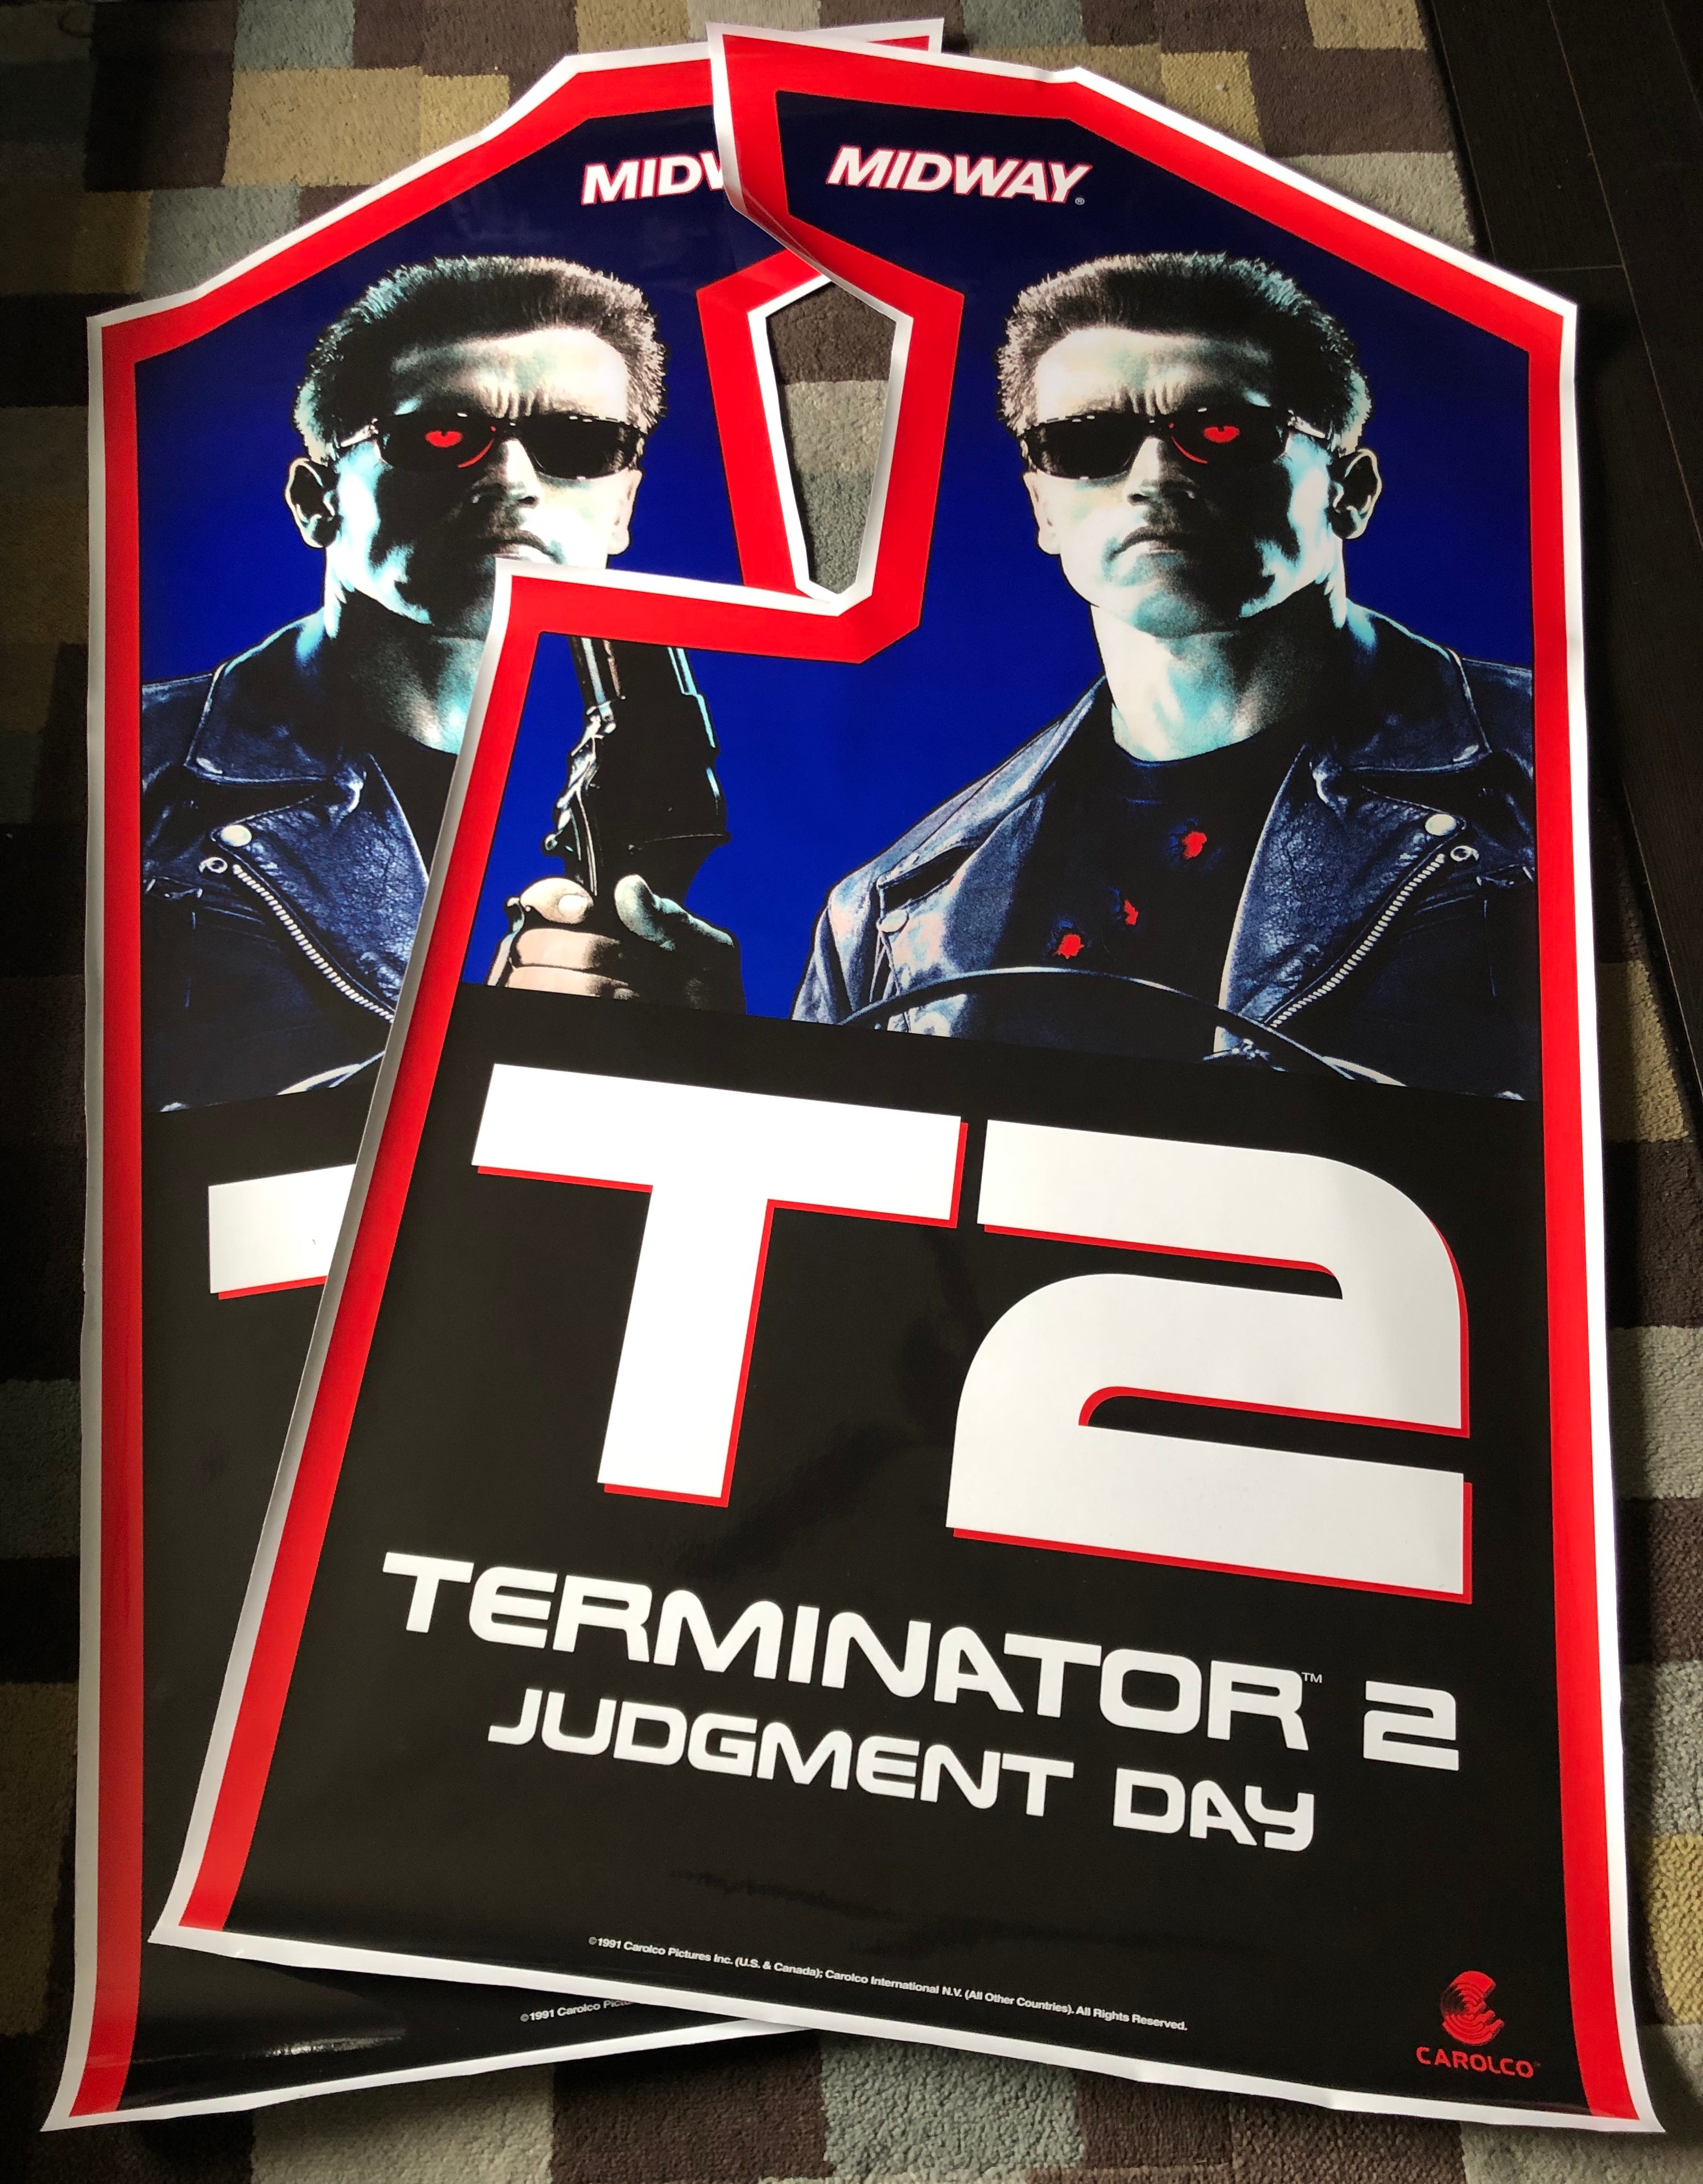 Terminator 2 Side Art